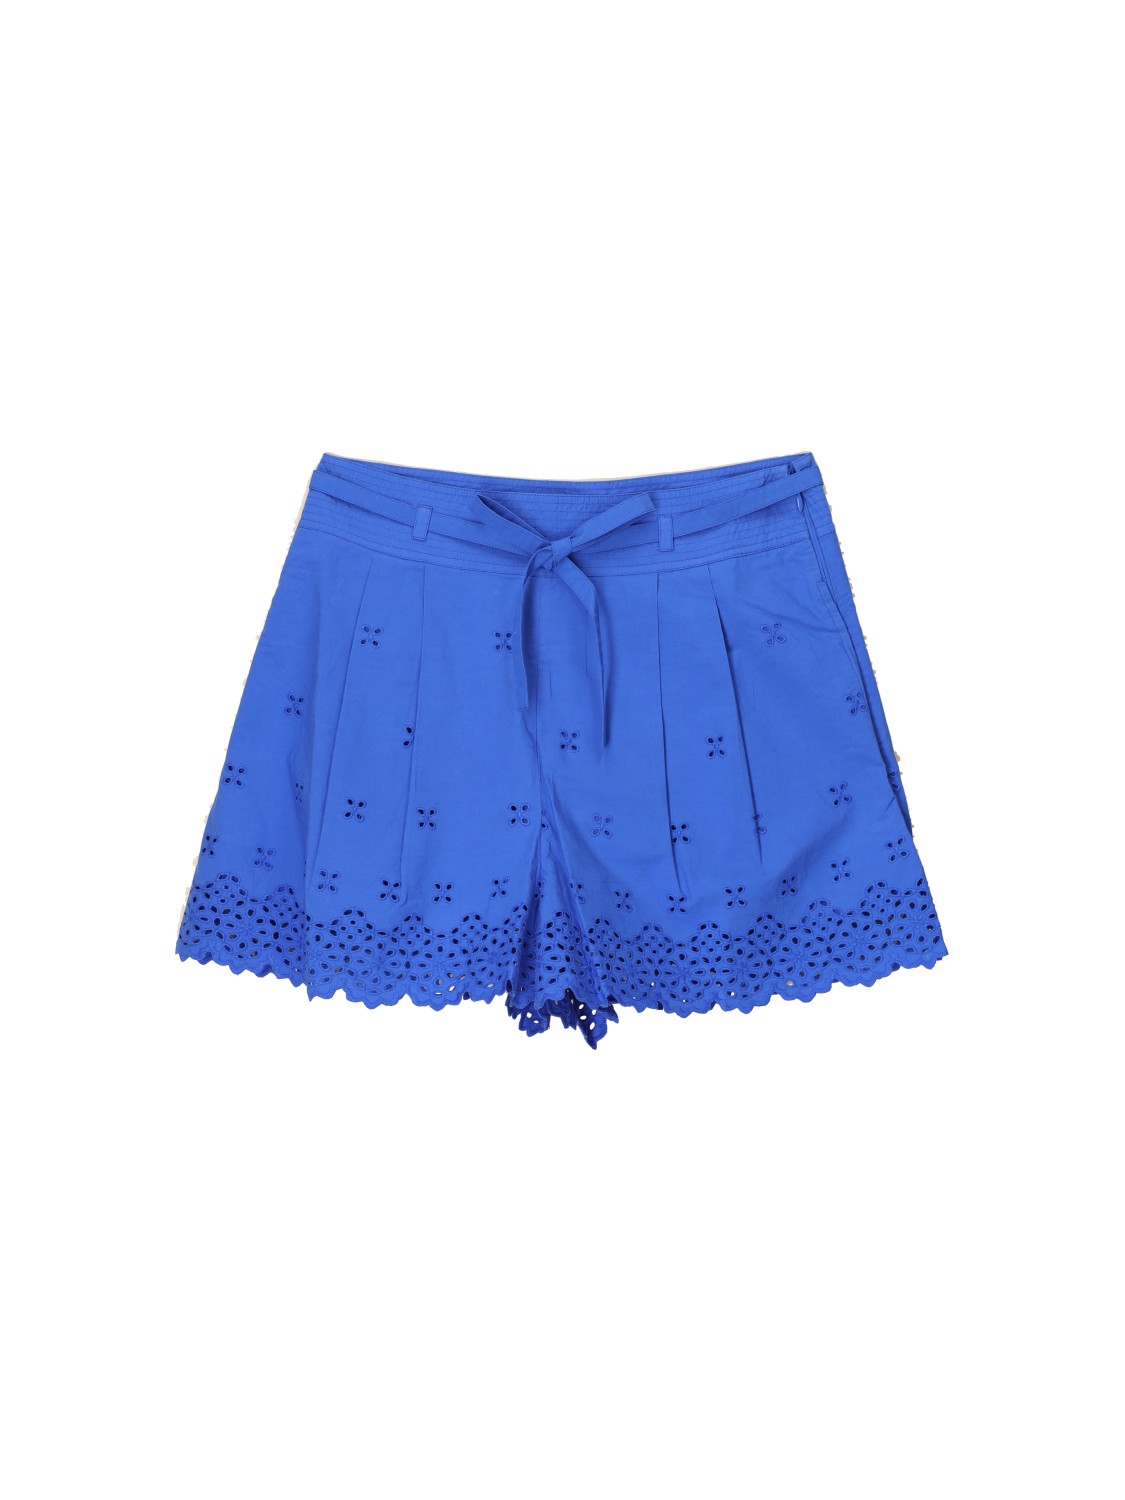 Ulla Johnson Sabine Shorts – cotton shorts with a hole pattern  blue 36